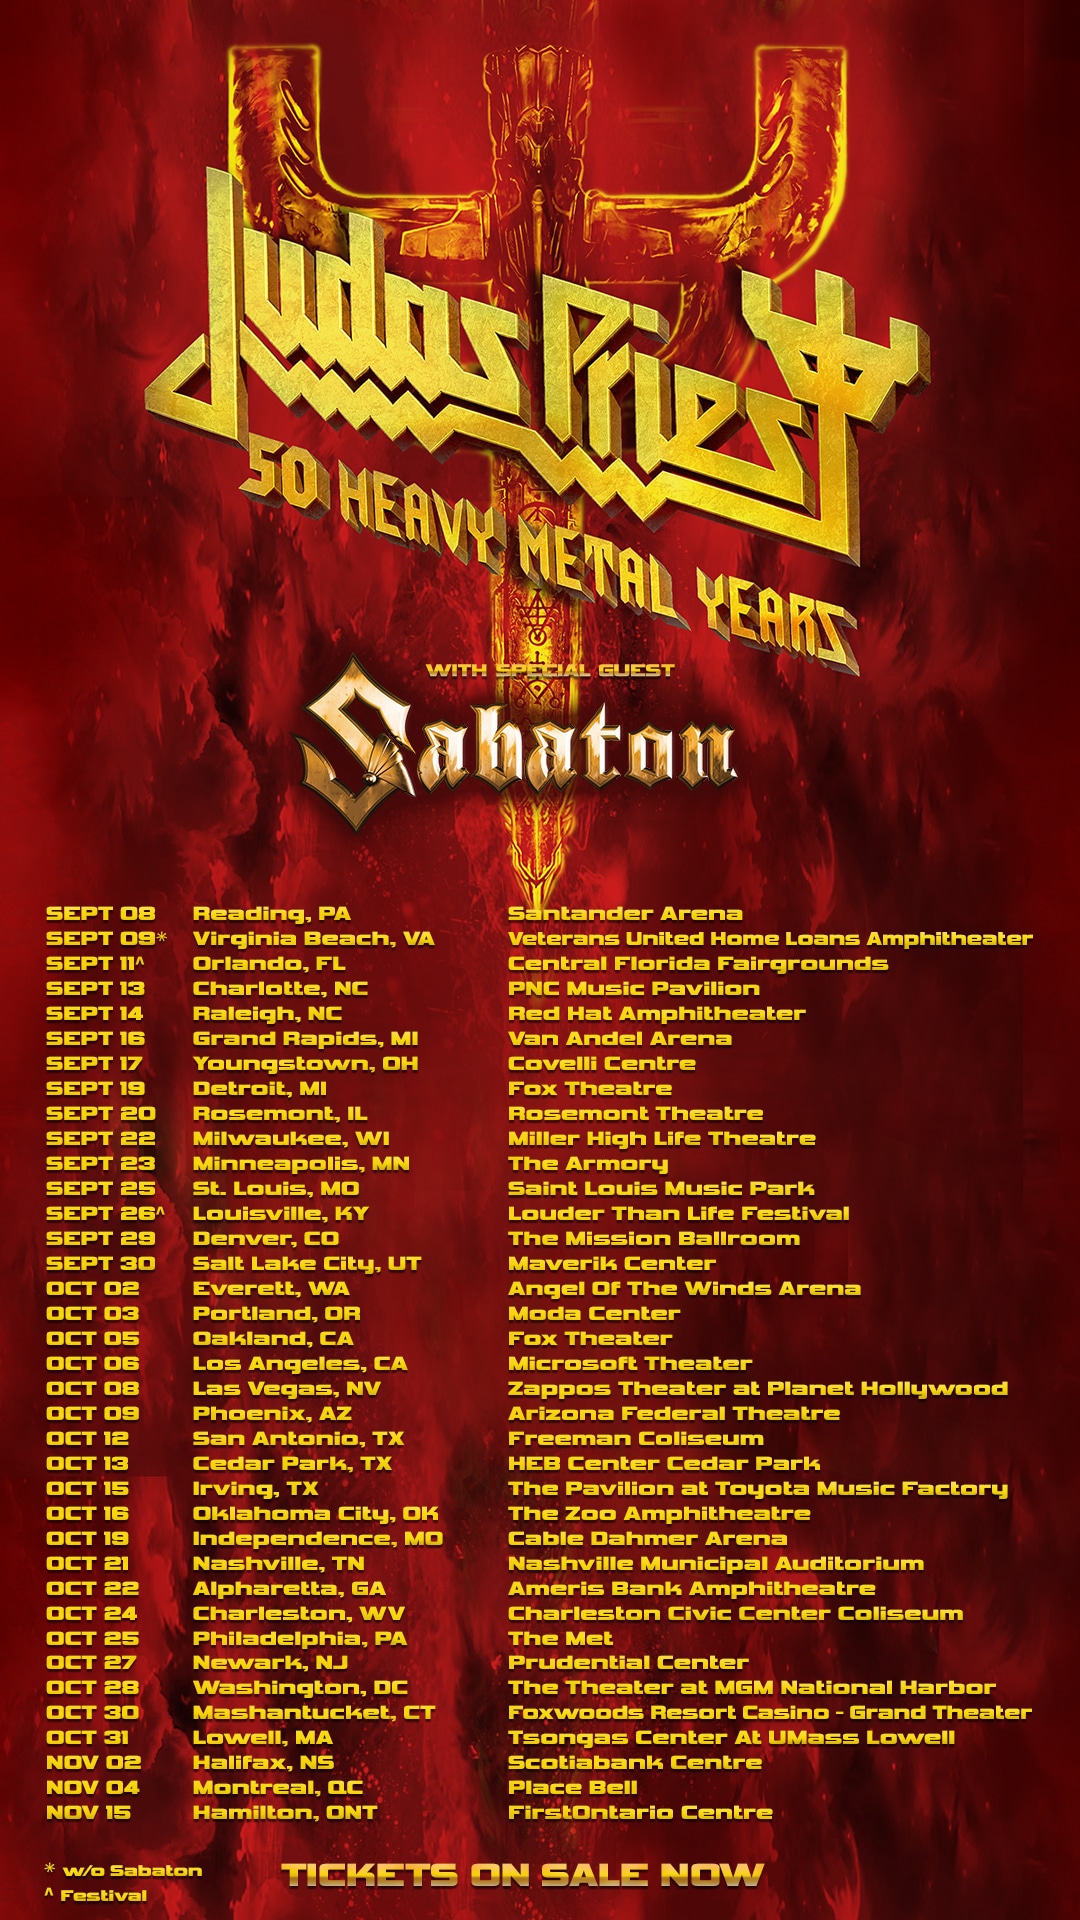 Judas Priest Announce Updated 50th Anniversary Tour Dates